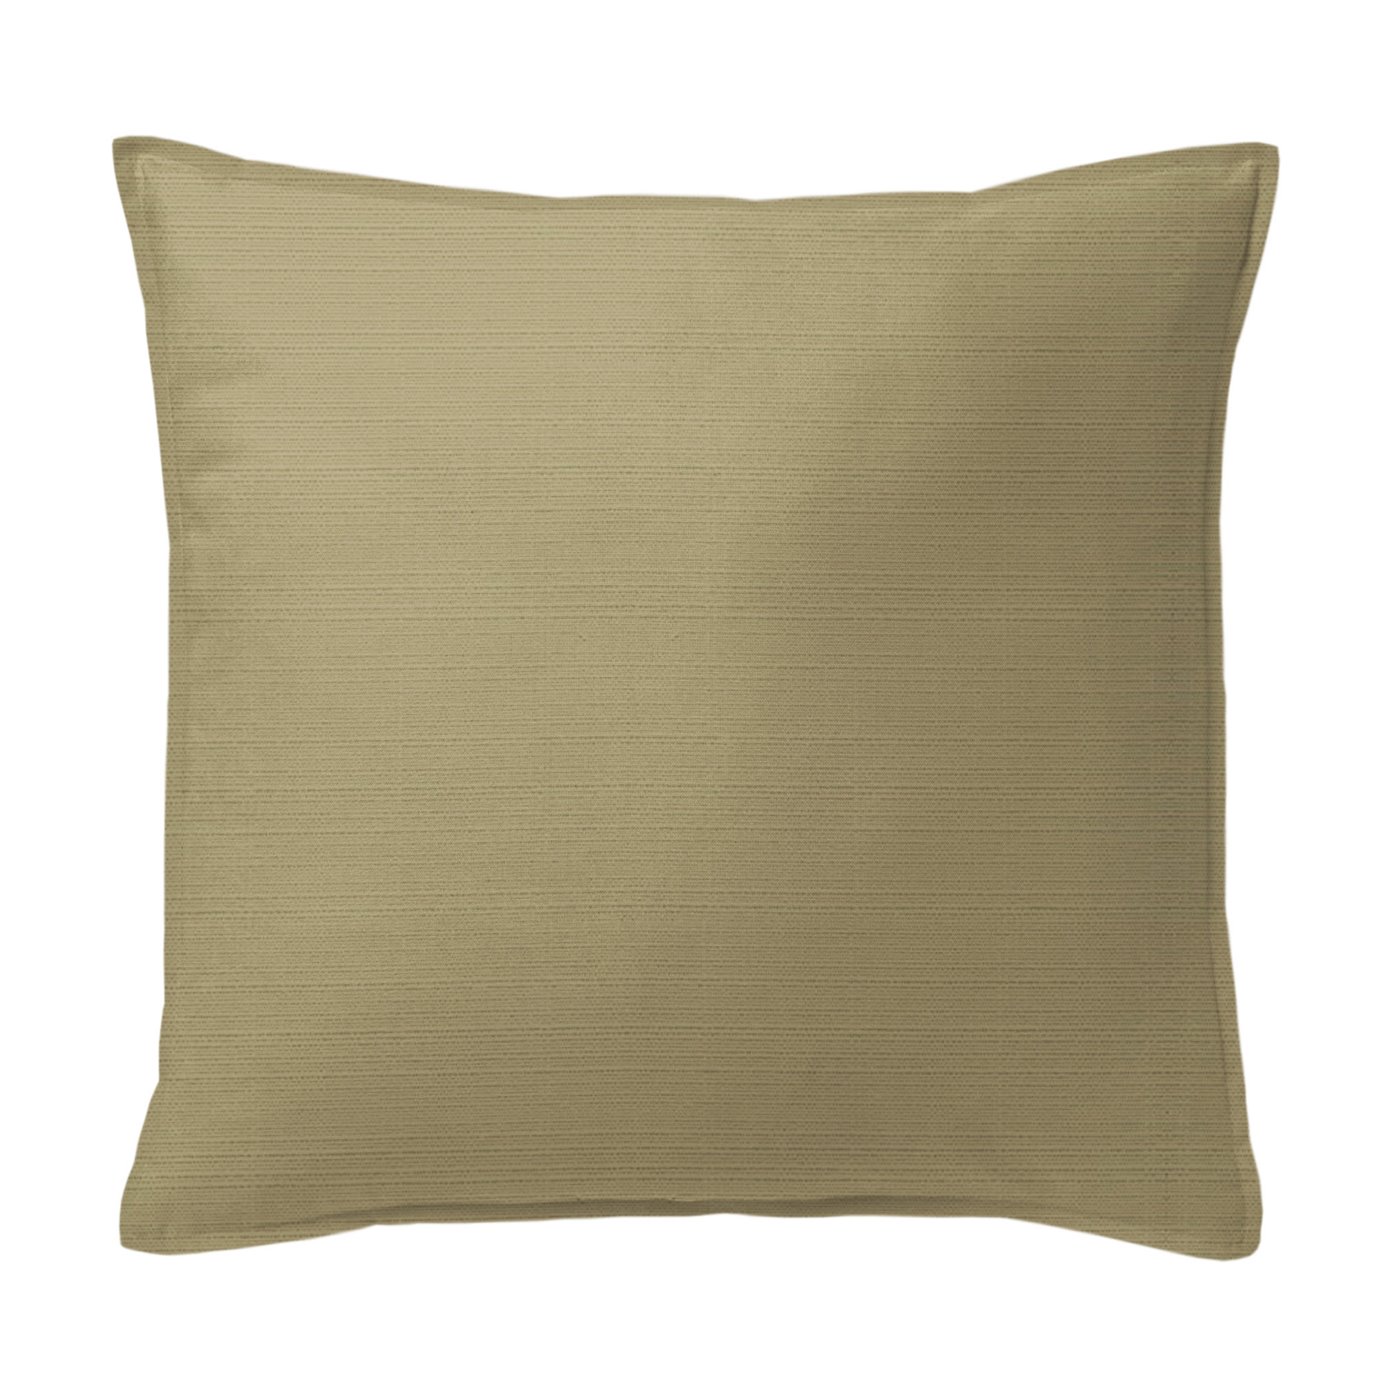 Nova Gold Decorative Pillow - Size 20" Square